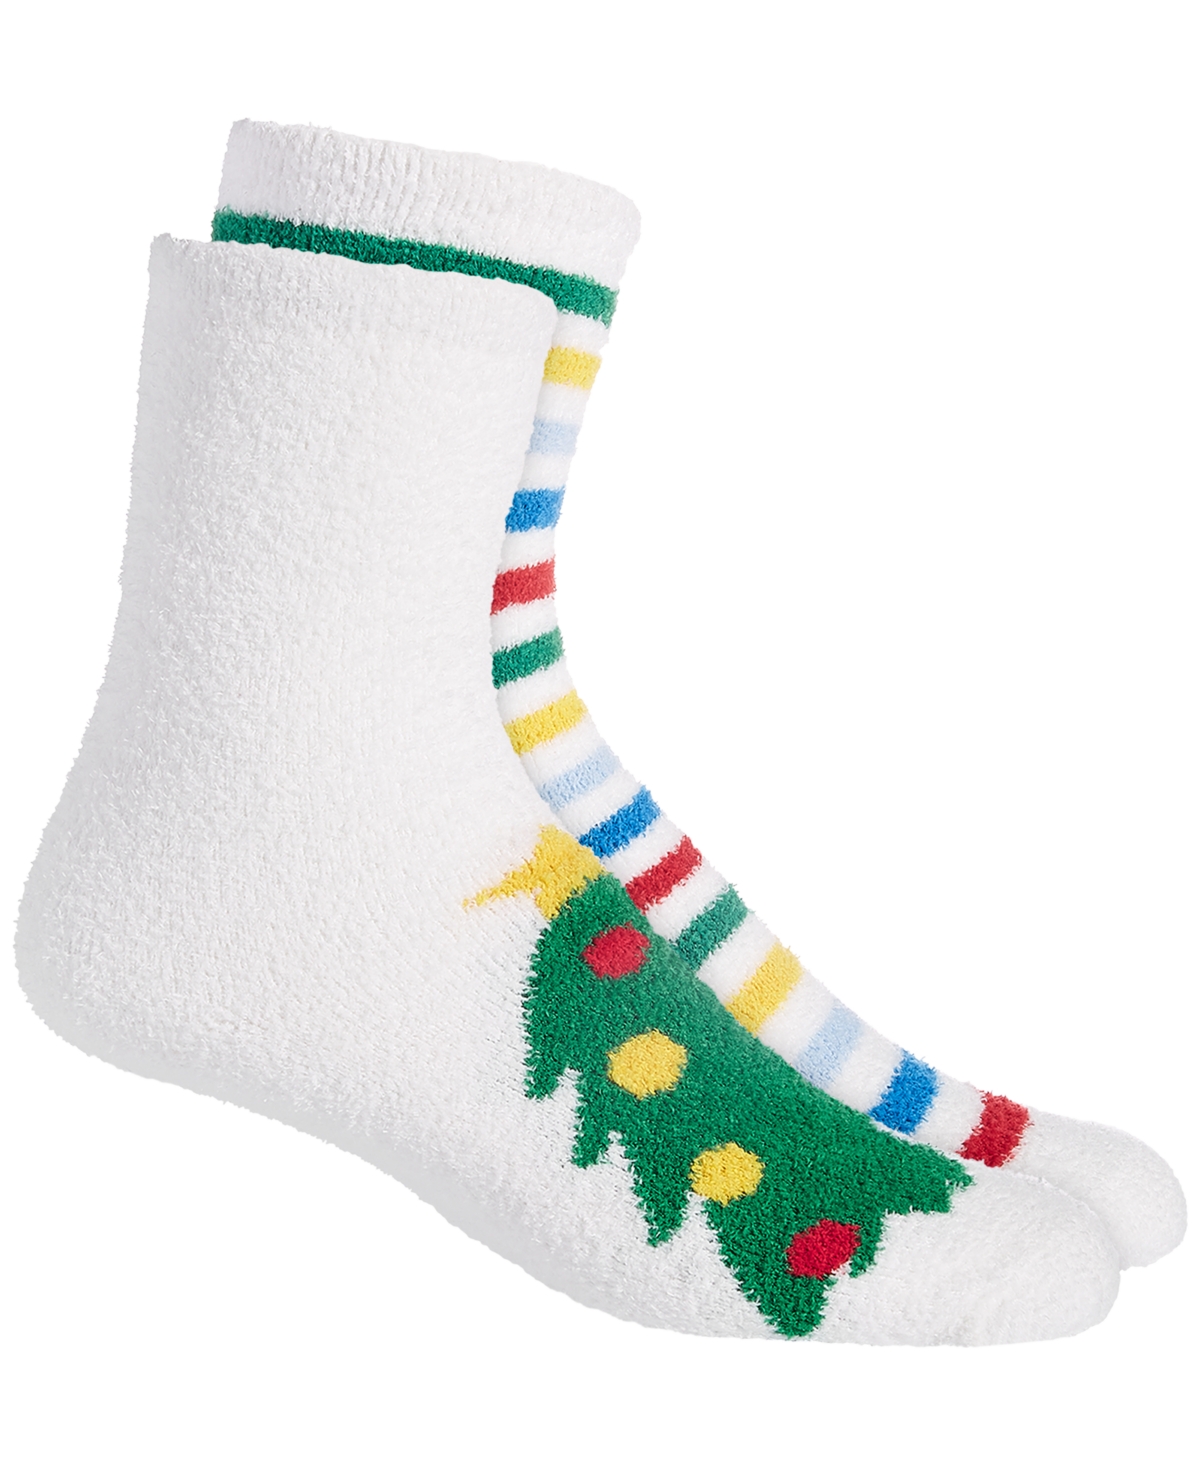 Women's 2-Pack Holiday Fuzzy Butter Socks - Hanukkah